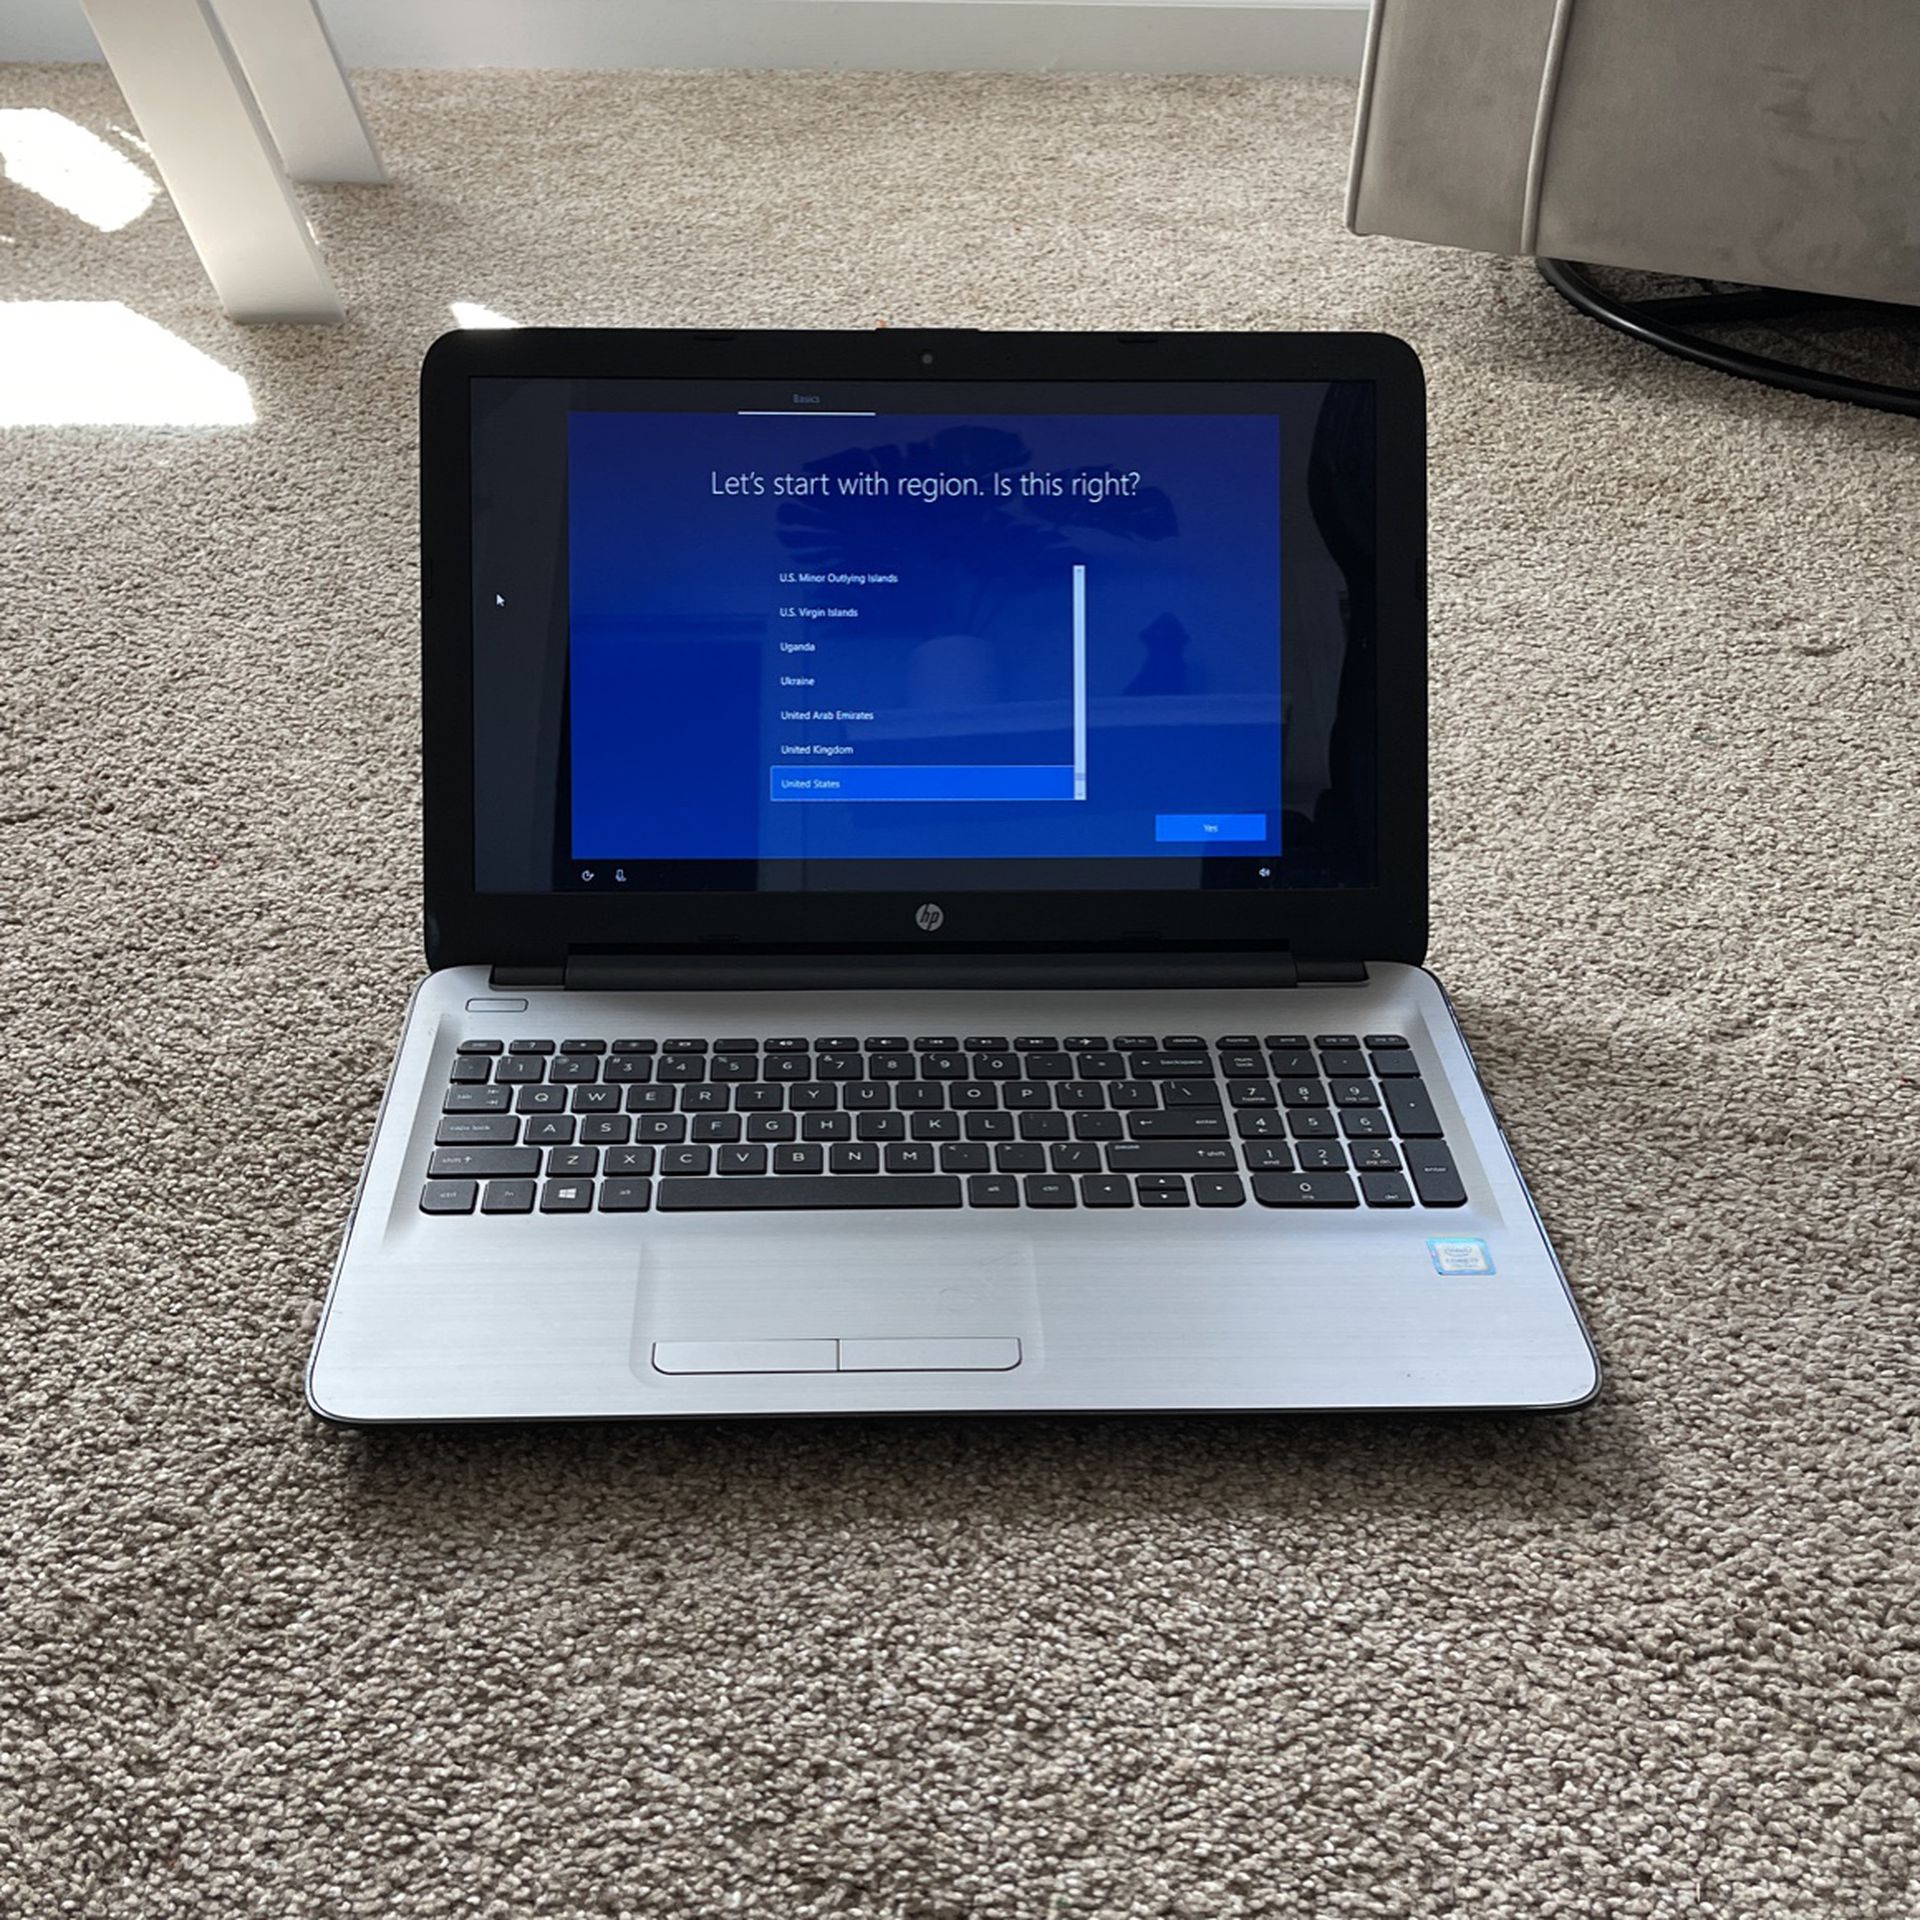 HP Touch Screen Laptop (i7-7500U, 2.7GHz, 8GB RAM, 1TB HDD)